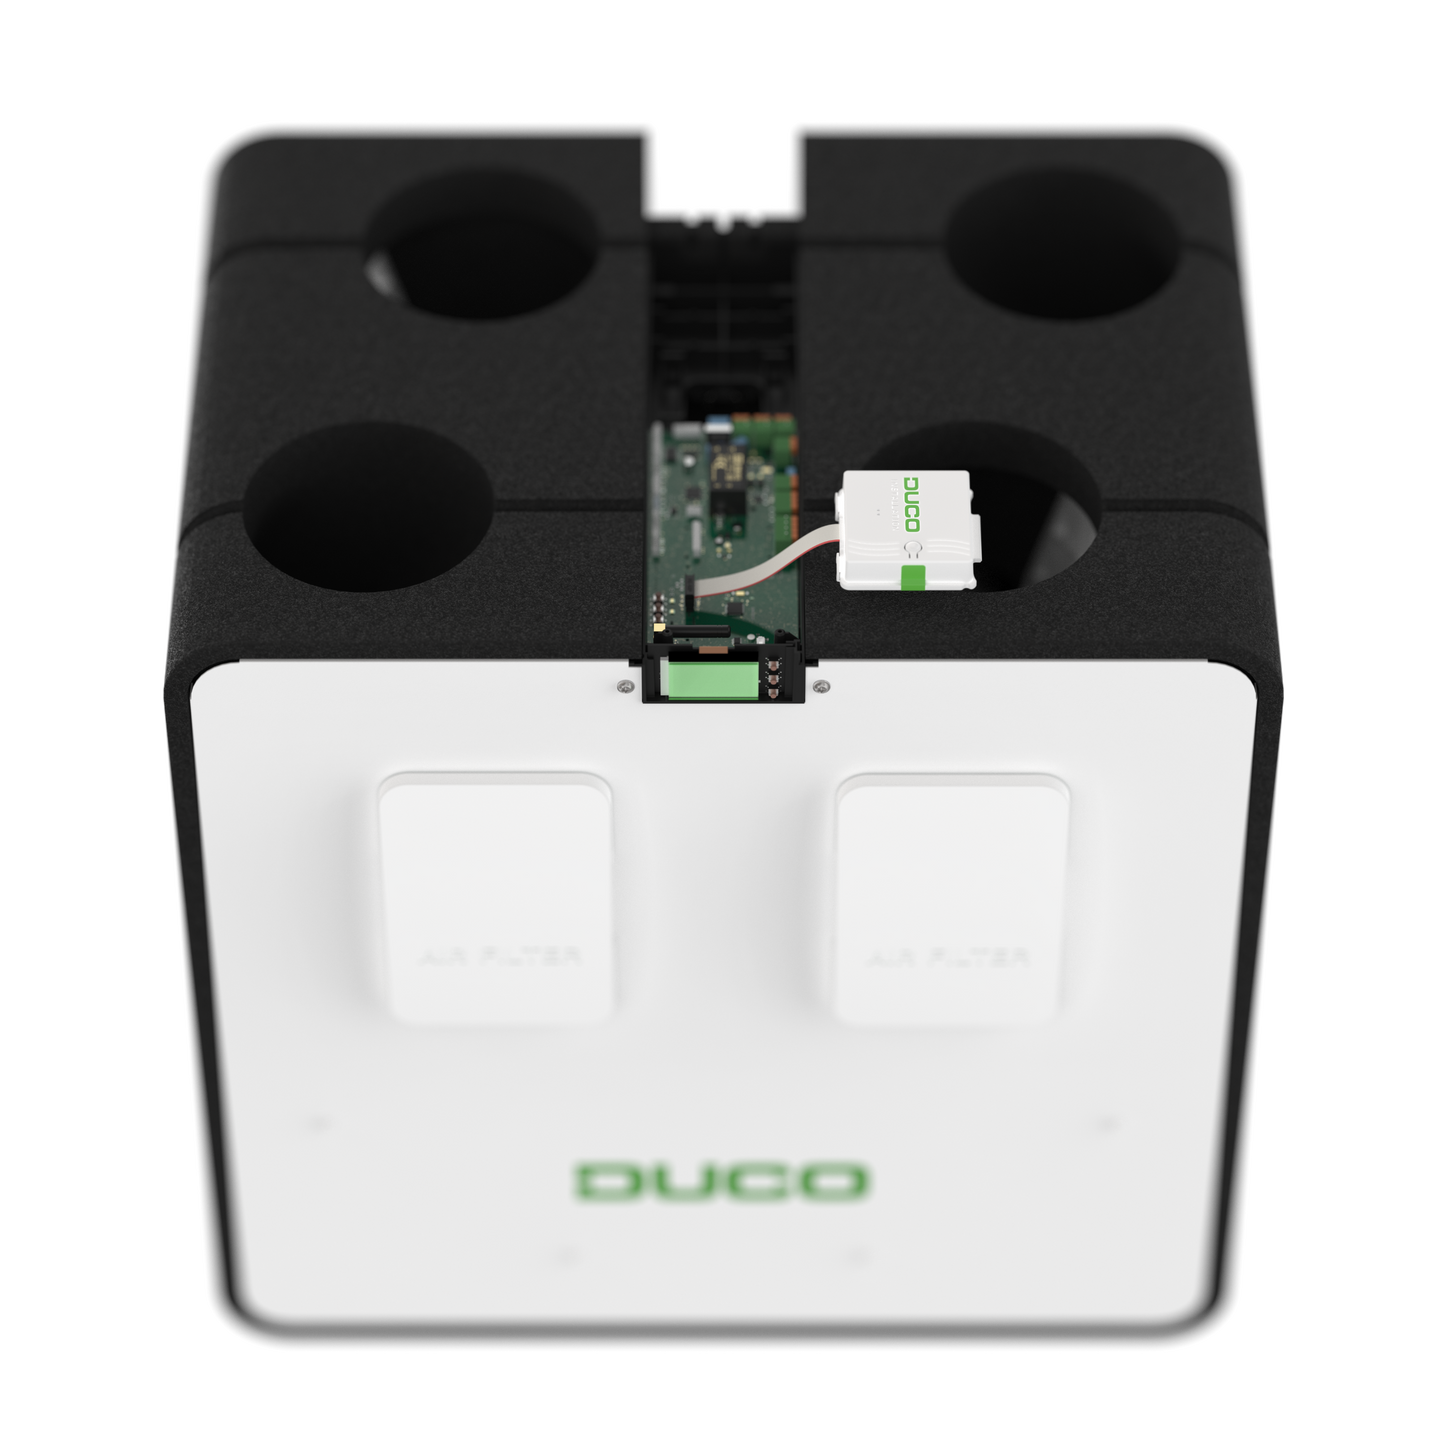 DucoBox Comfort + Duco Installation Kit